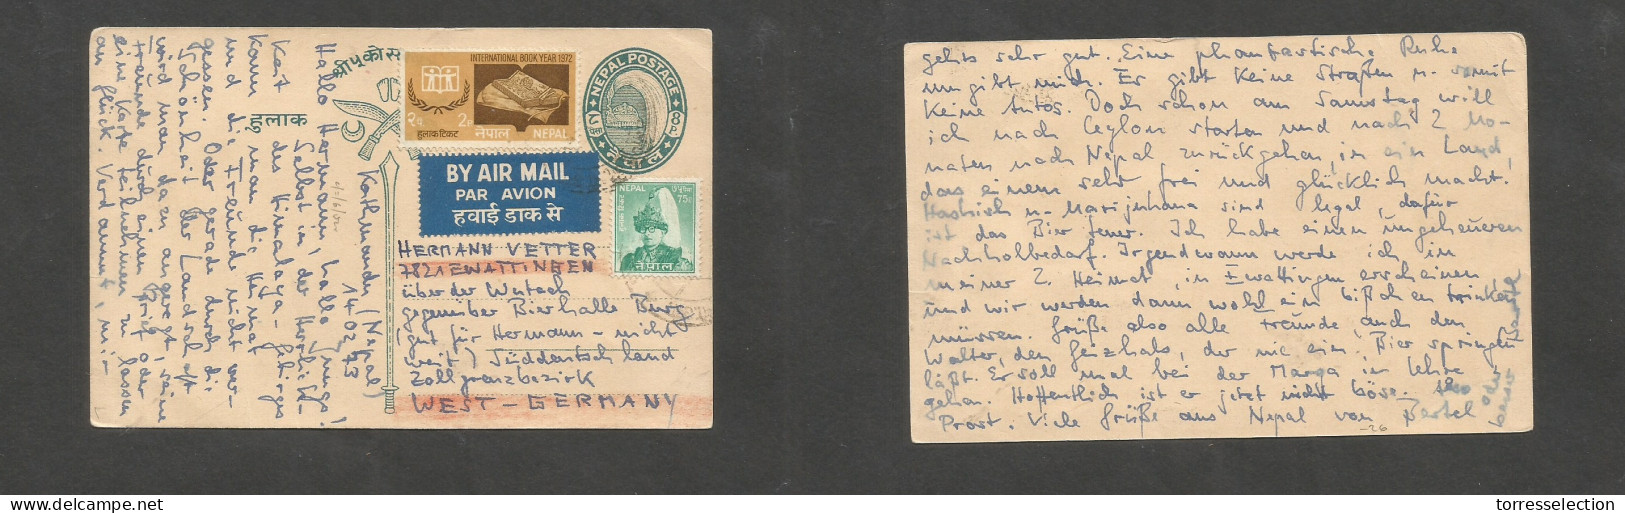 NEPAL. 1973 (14 Febr) Kathmandu - West Germany, Ewattineen. 8p Stat Card + 2 Adtls On Airmail Usage. Fine. SALE. - Nepal